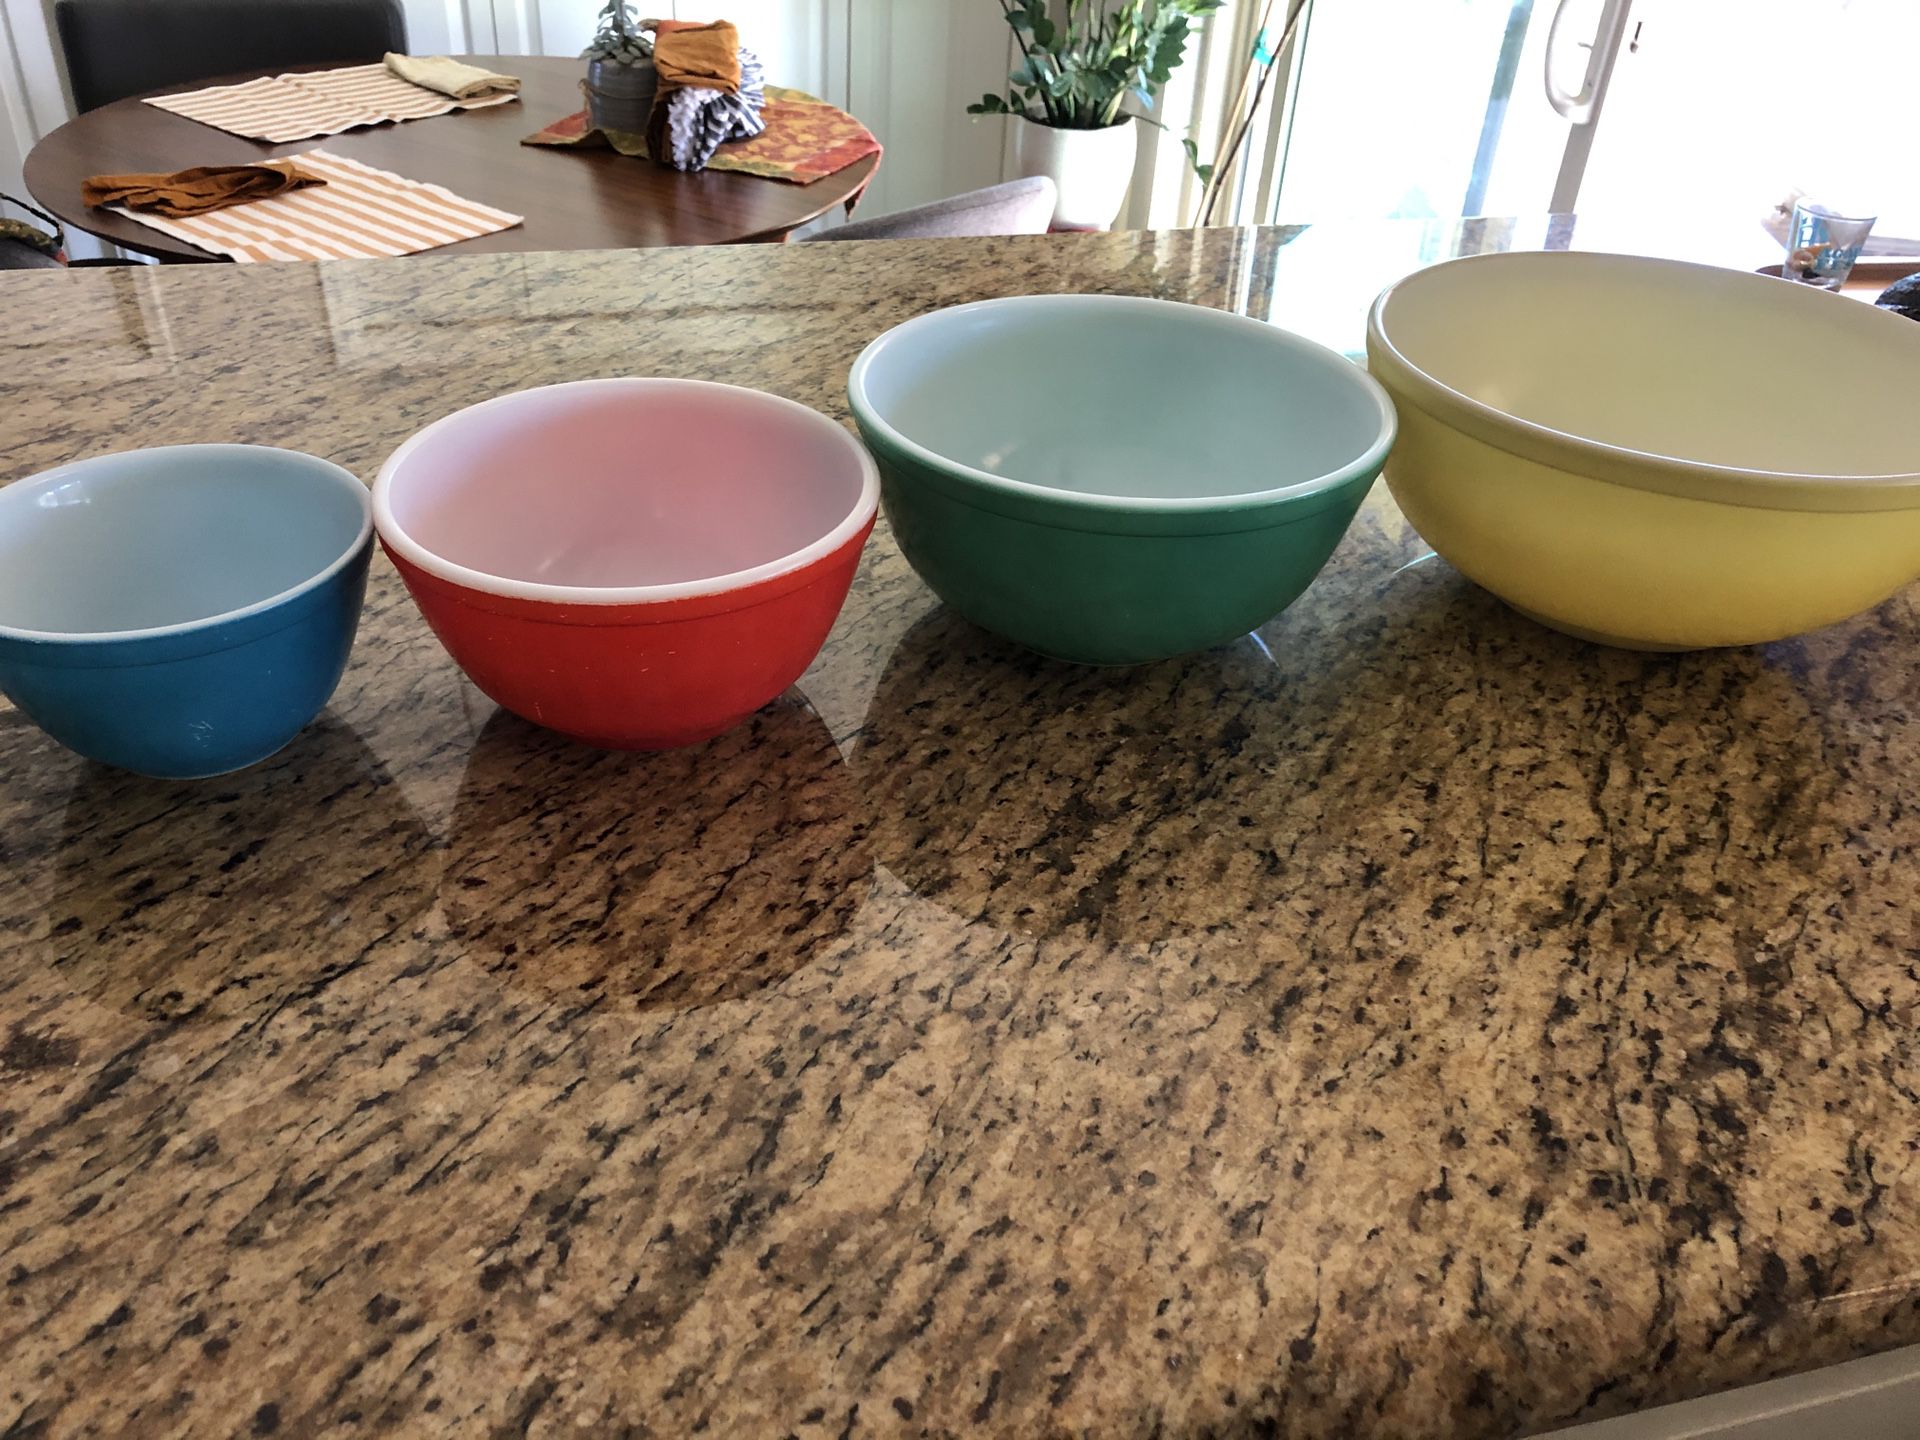 Classic Pyrex glass mixing bowls